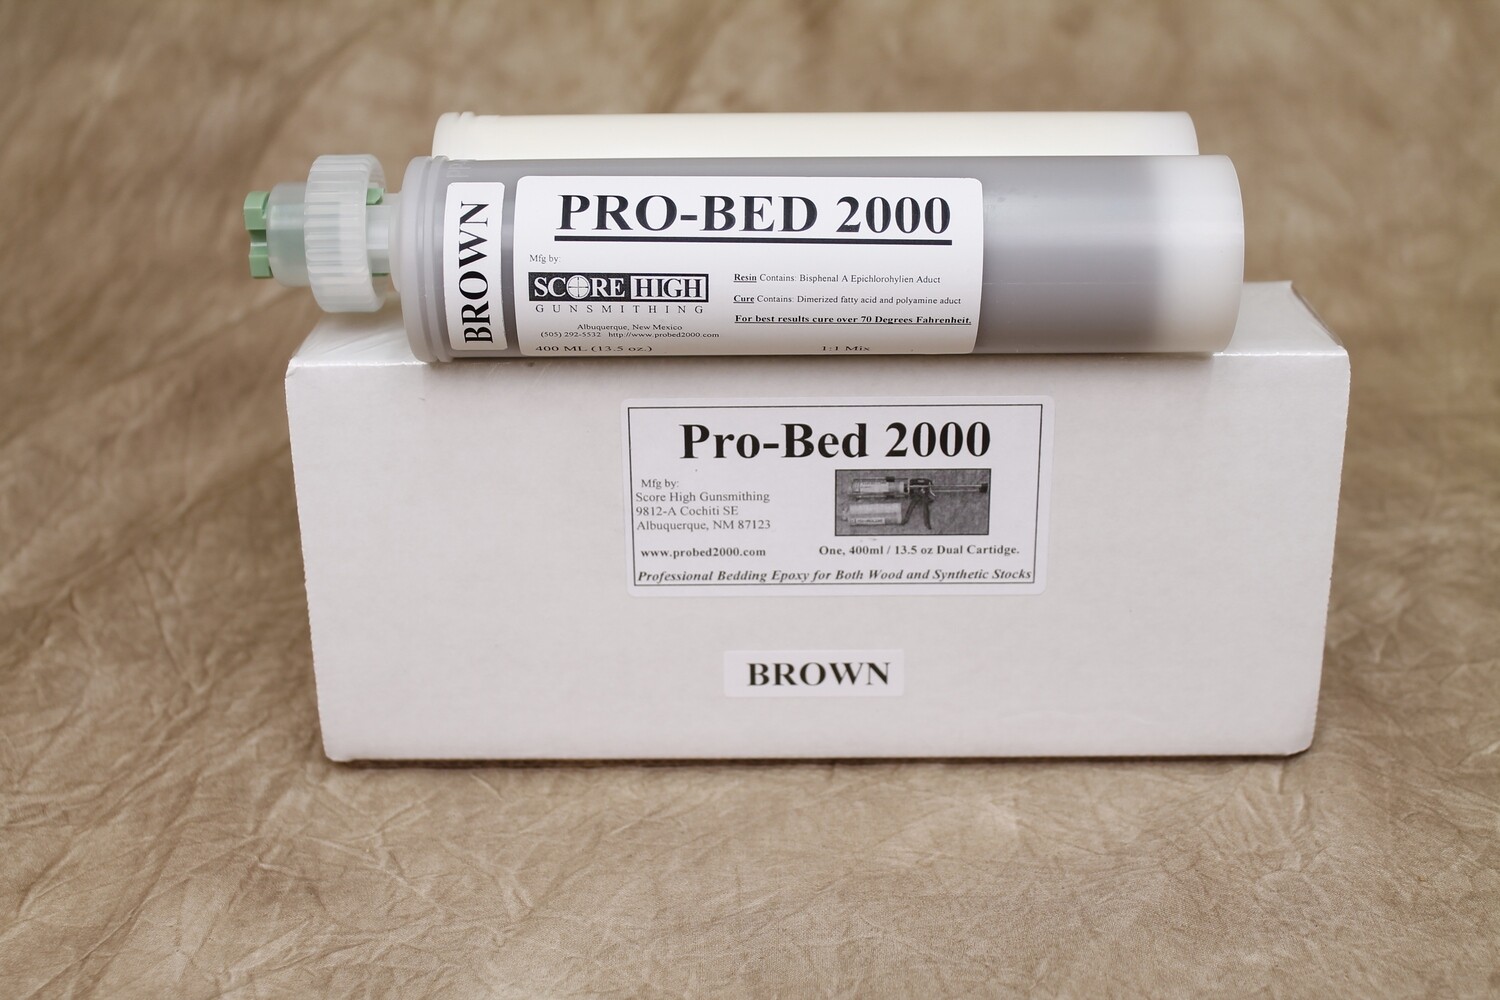 Score-High Pro-Bed 2000 2oz Single Rifle Bedding Kit Brown